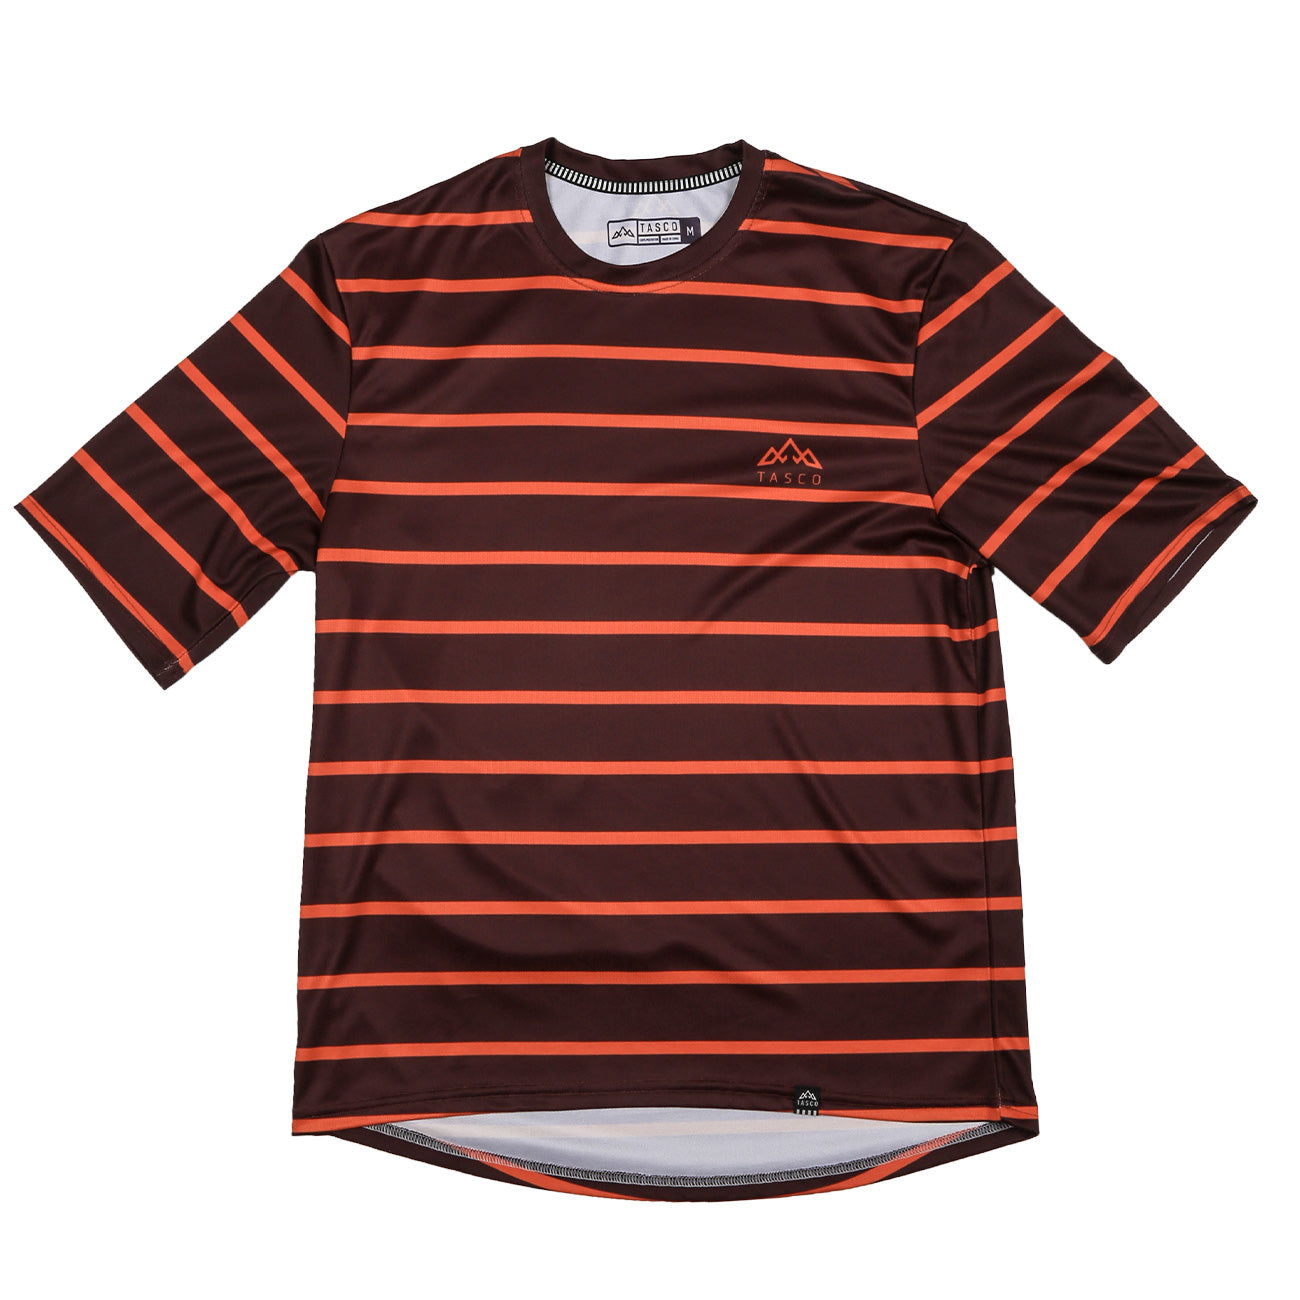 TASCOMTB Old Town Trail Jersey Short Sleeve maroon/orange stripe front